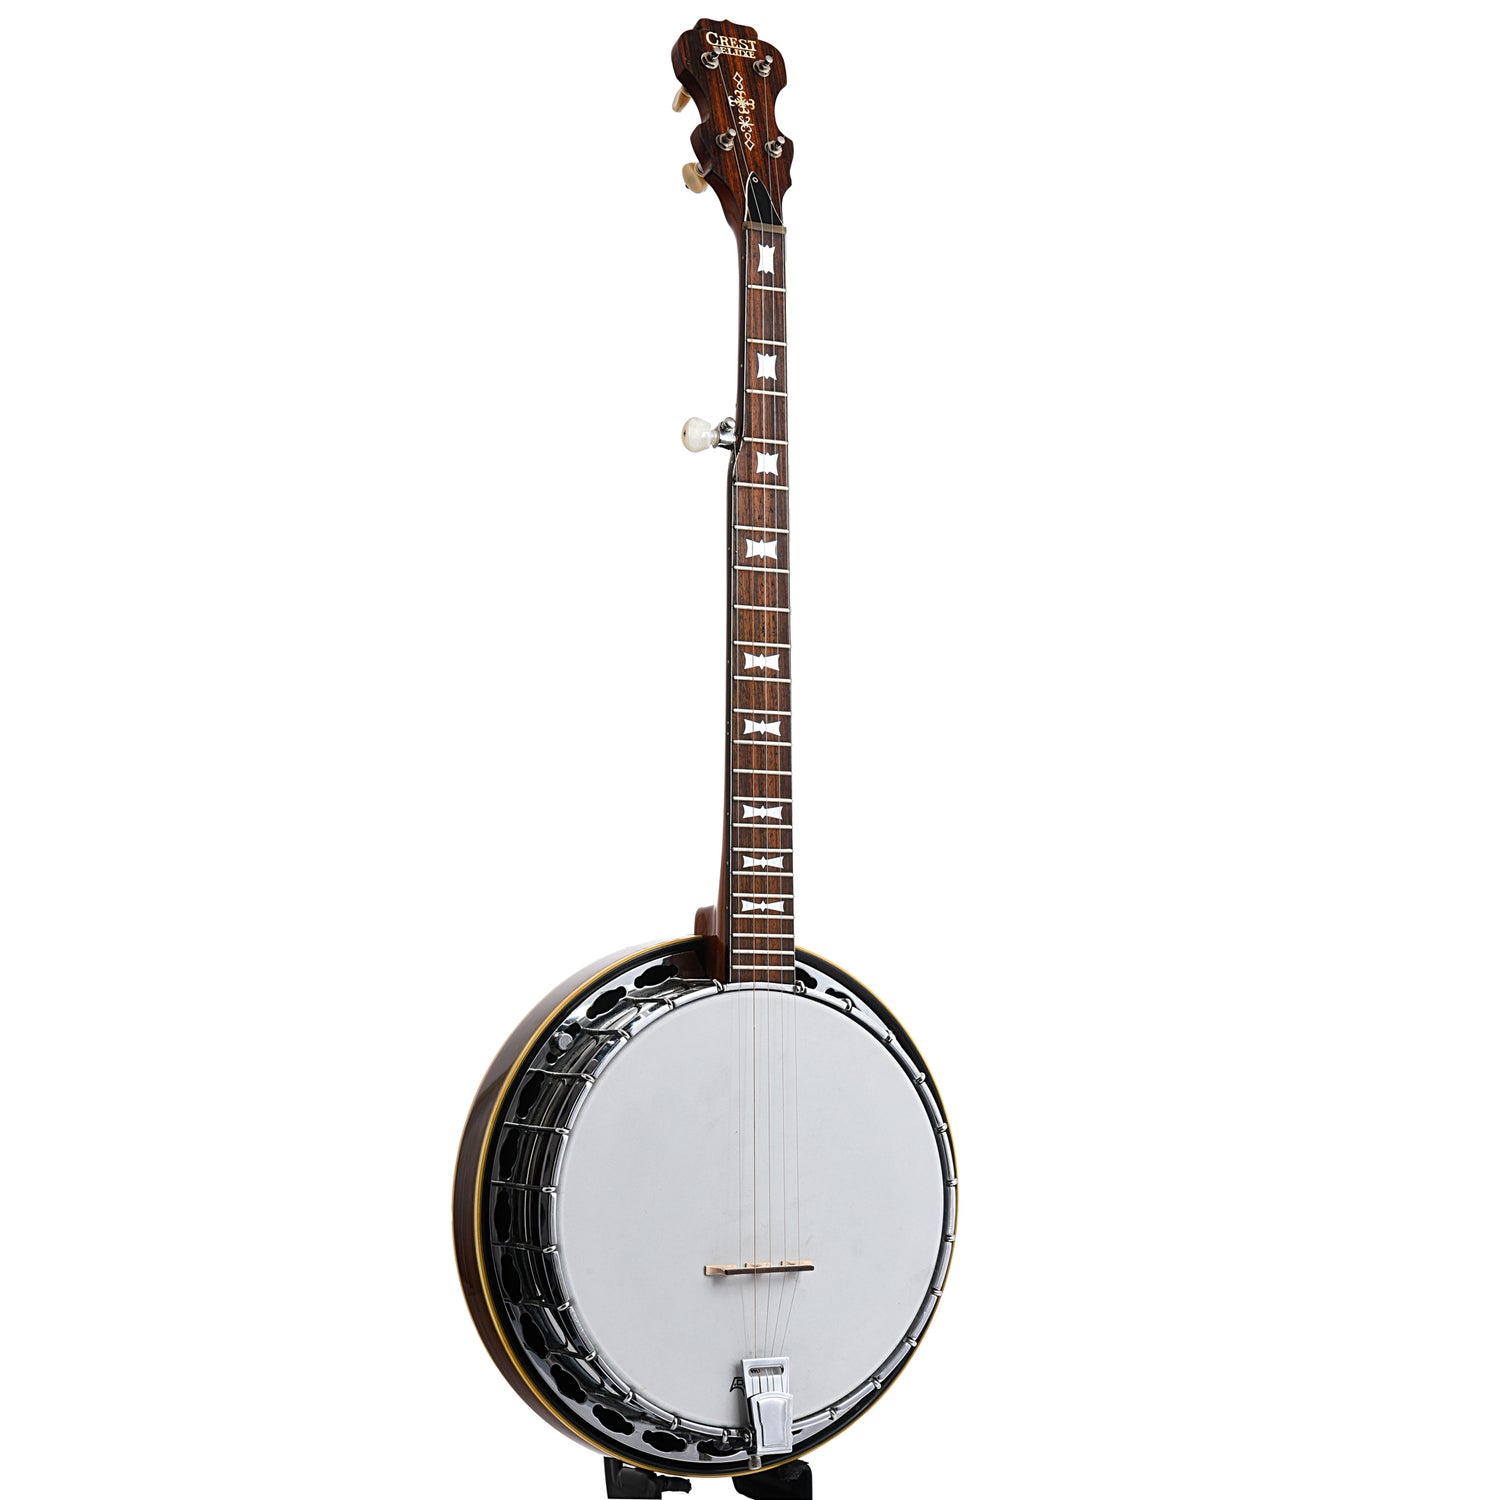 Image 2 of Crest Deluxe Banjo (1970s) - SKU# 70U-208437 : Product Type Resonator Back Banjos : Elderly Instruments